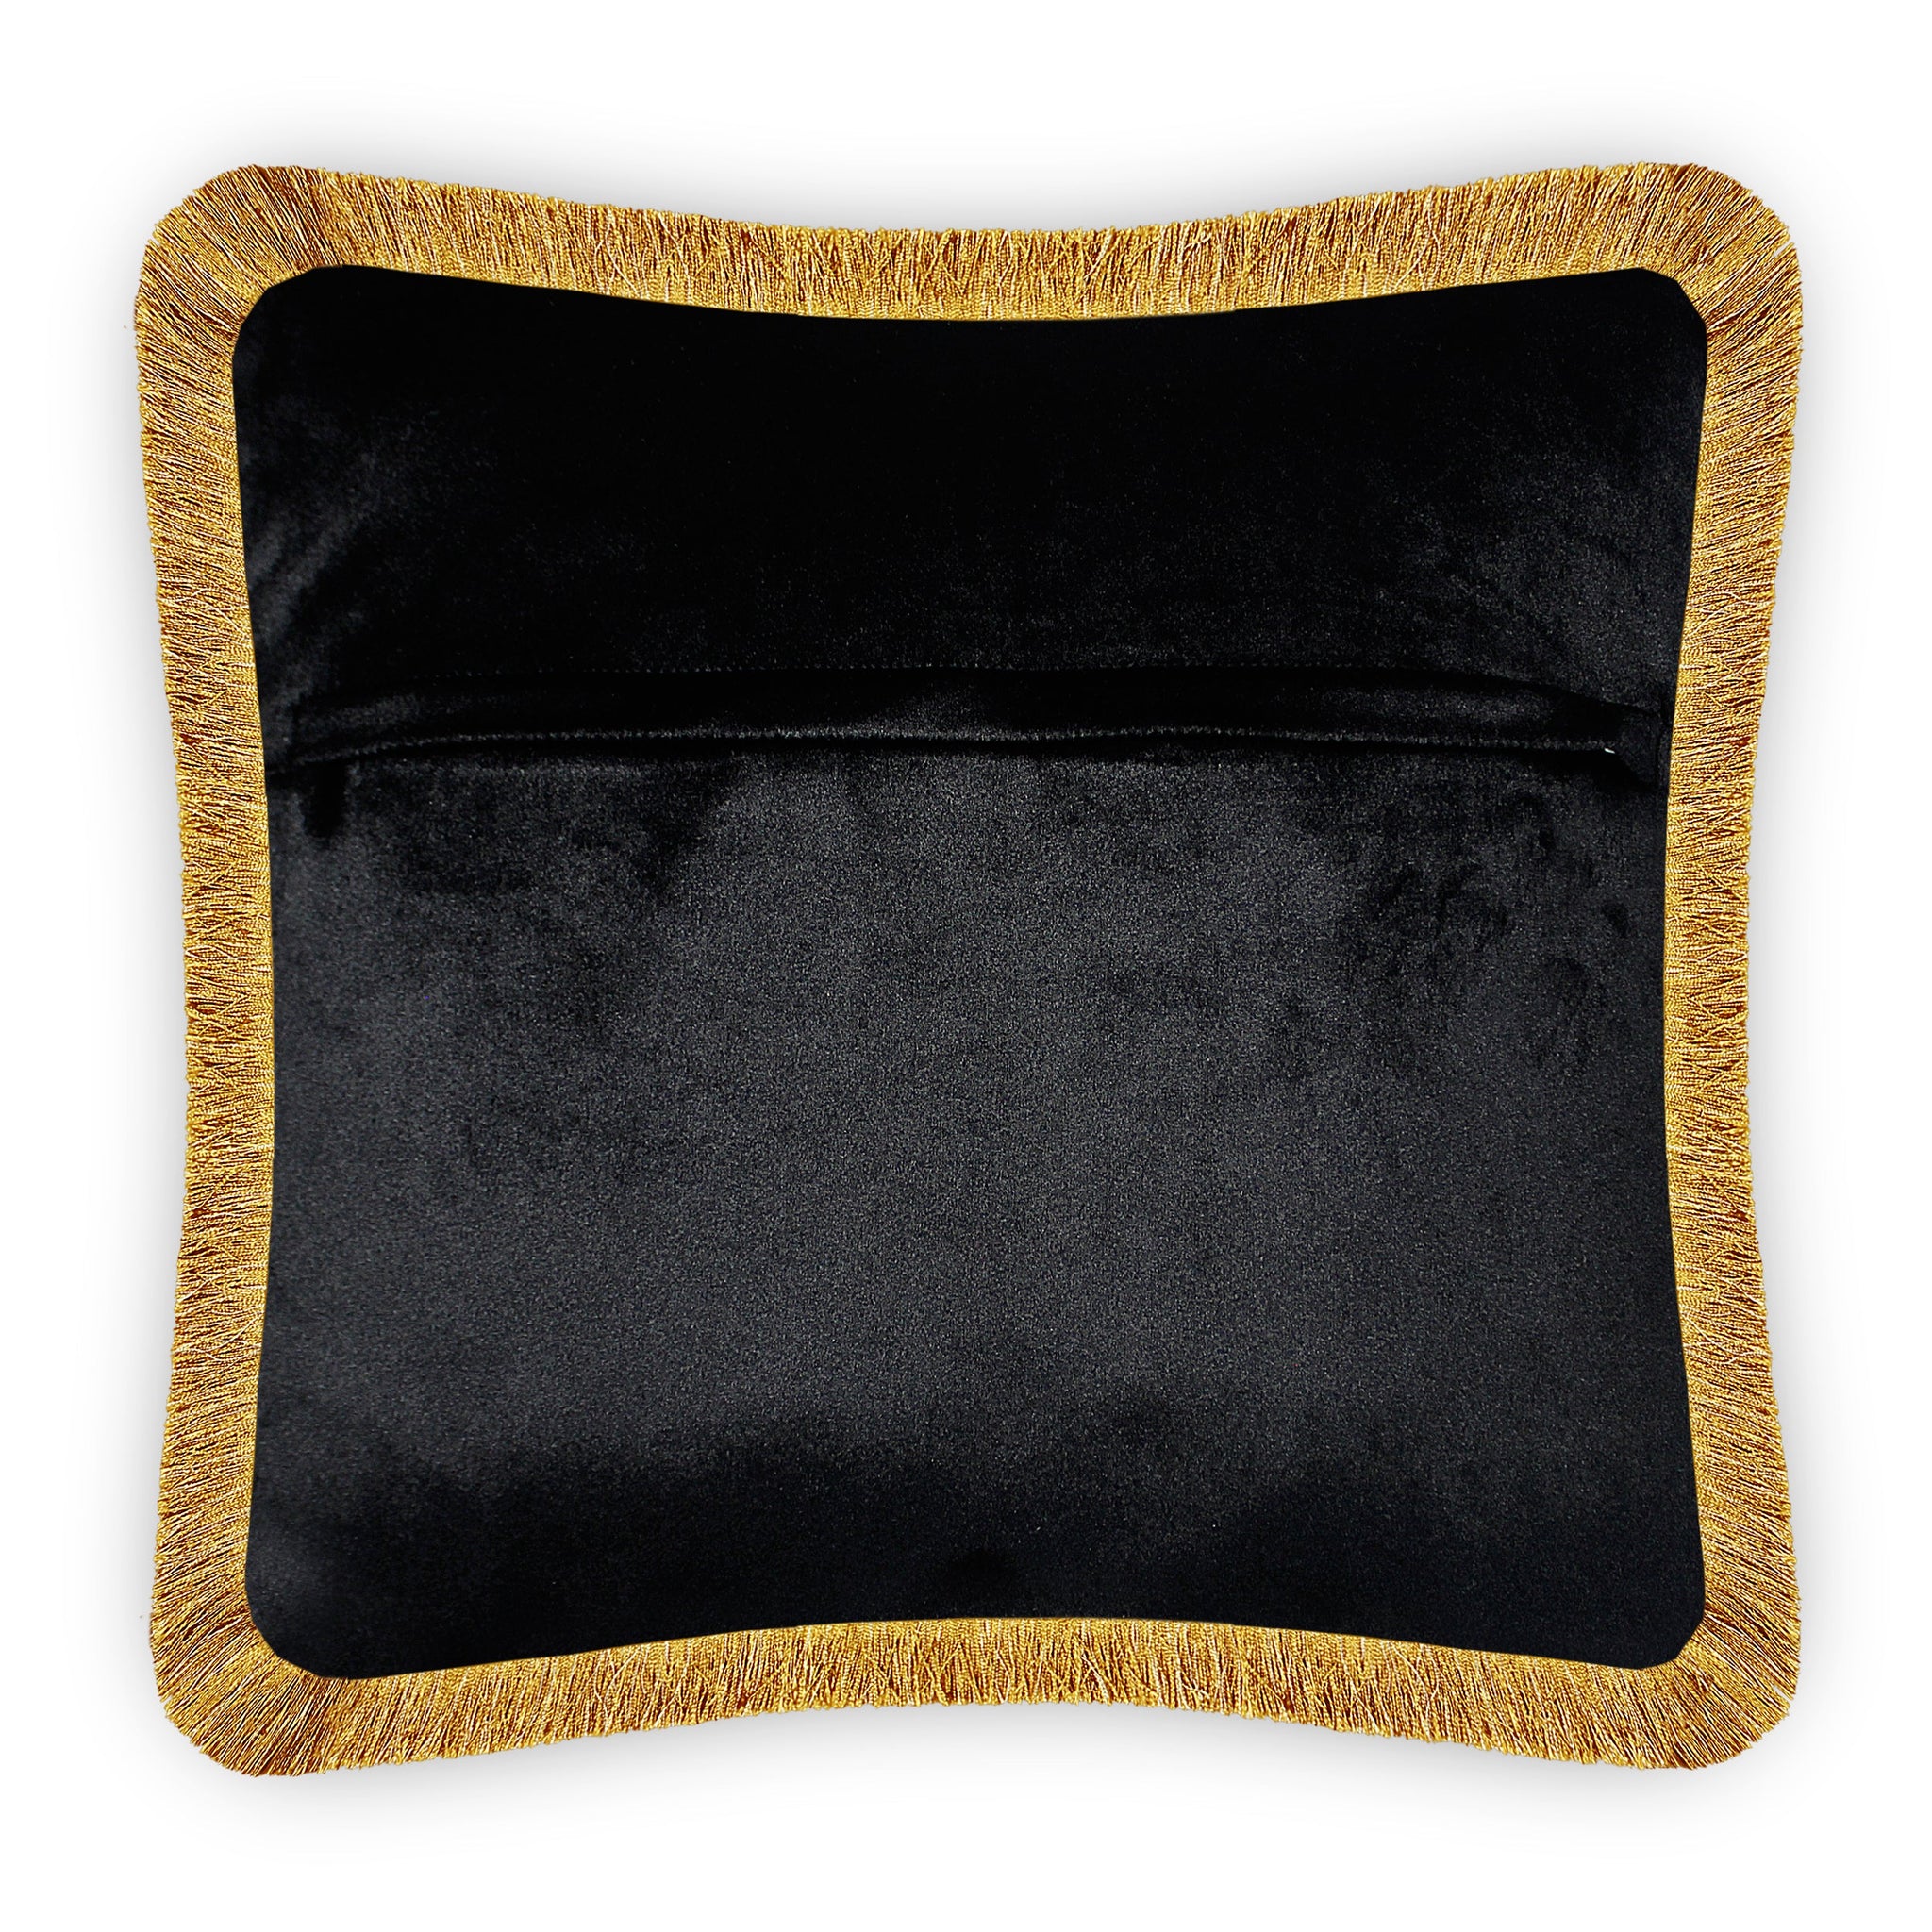  Velvet Cushion Cover Embroidery Imitated Baroque Horse Decorative pillowcase Classic Motif Décor Throw Pillow for Sofa Chair 45x45cm 18x18 Inches